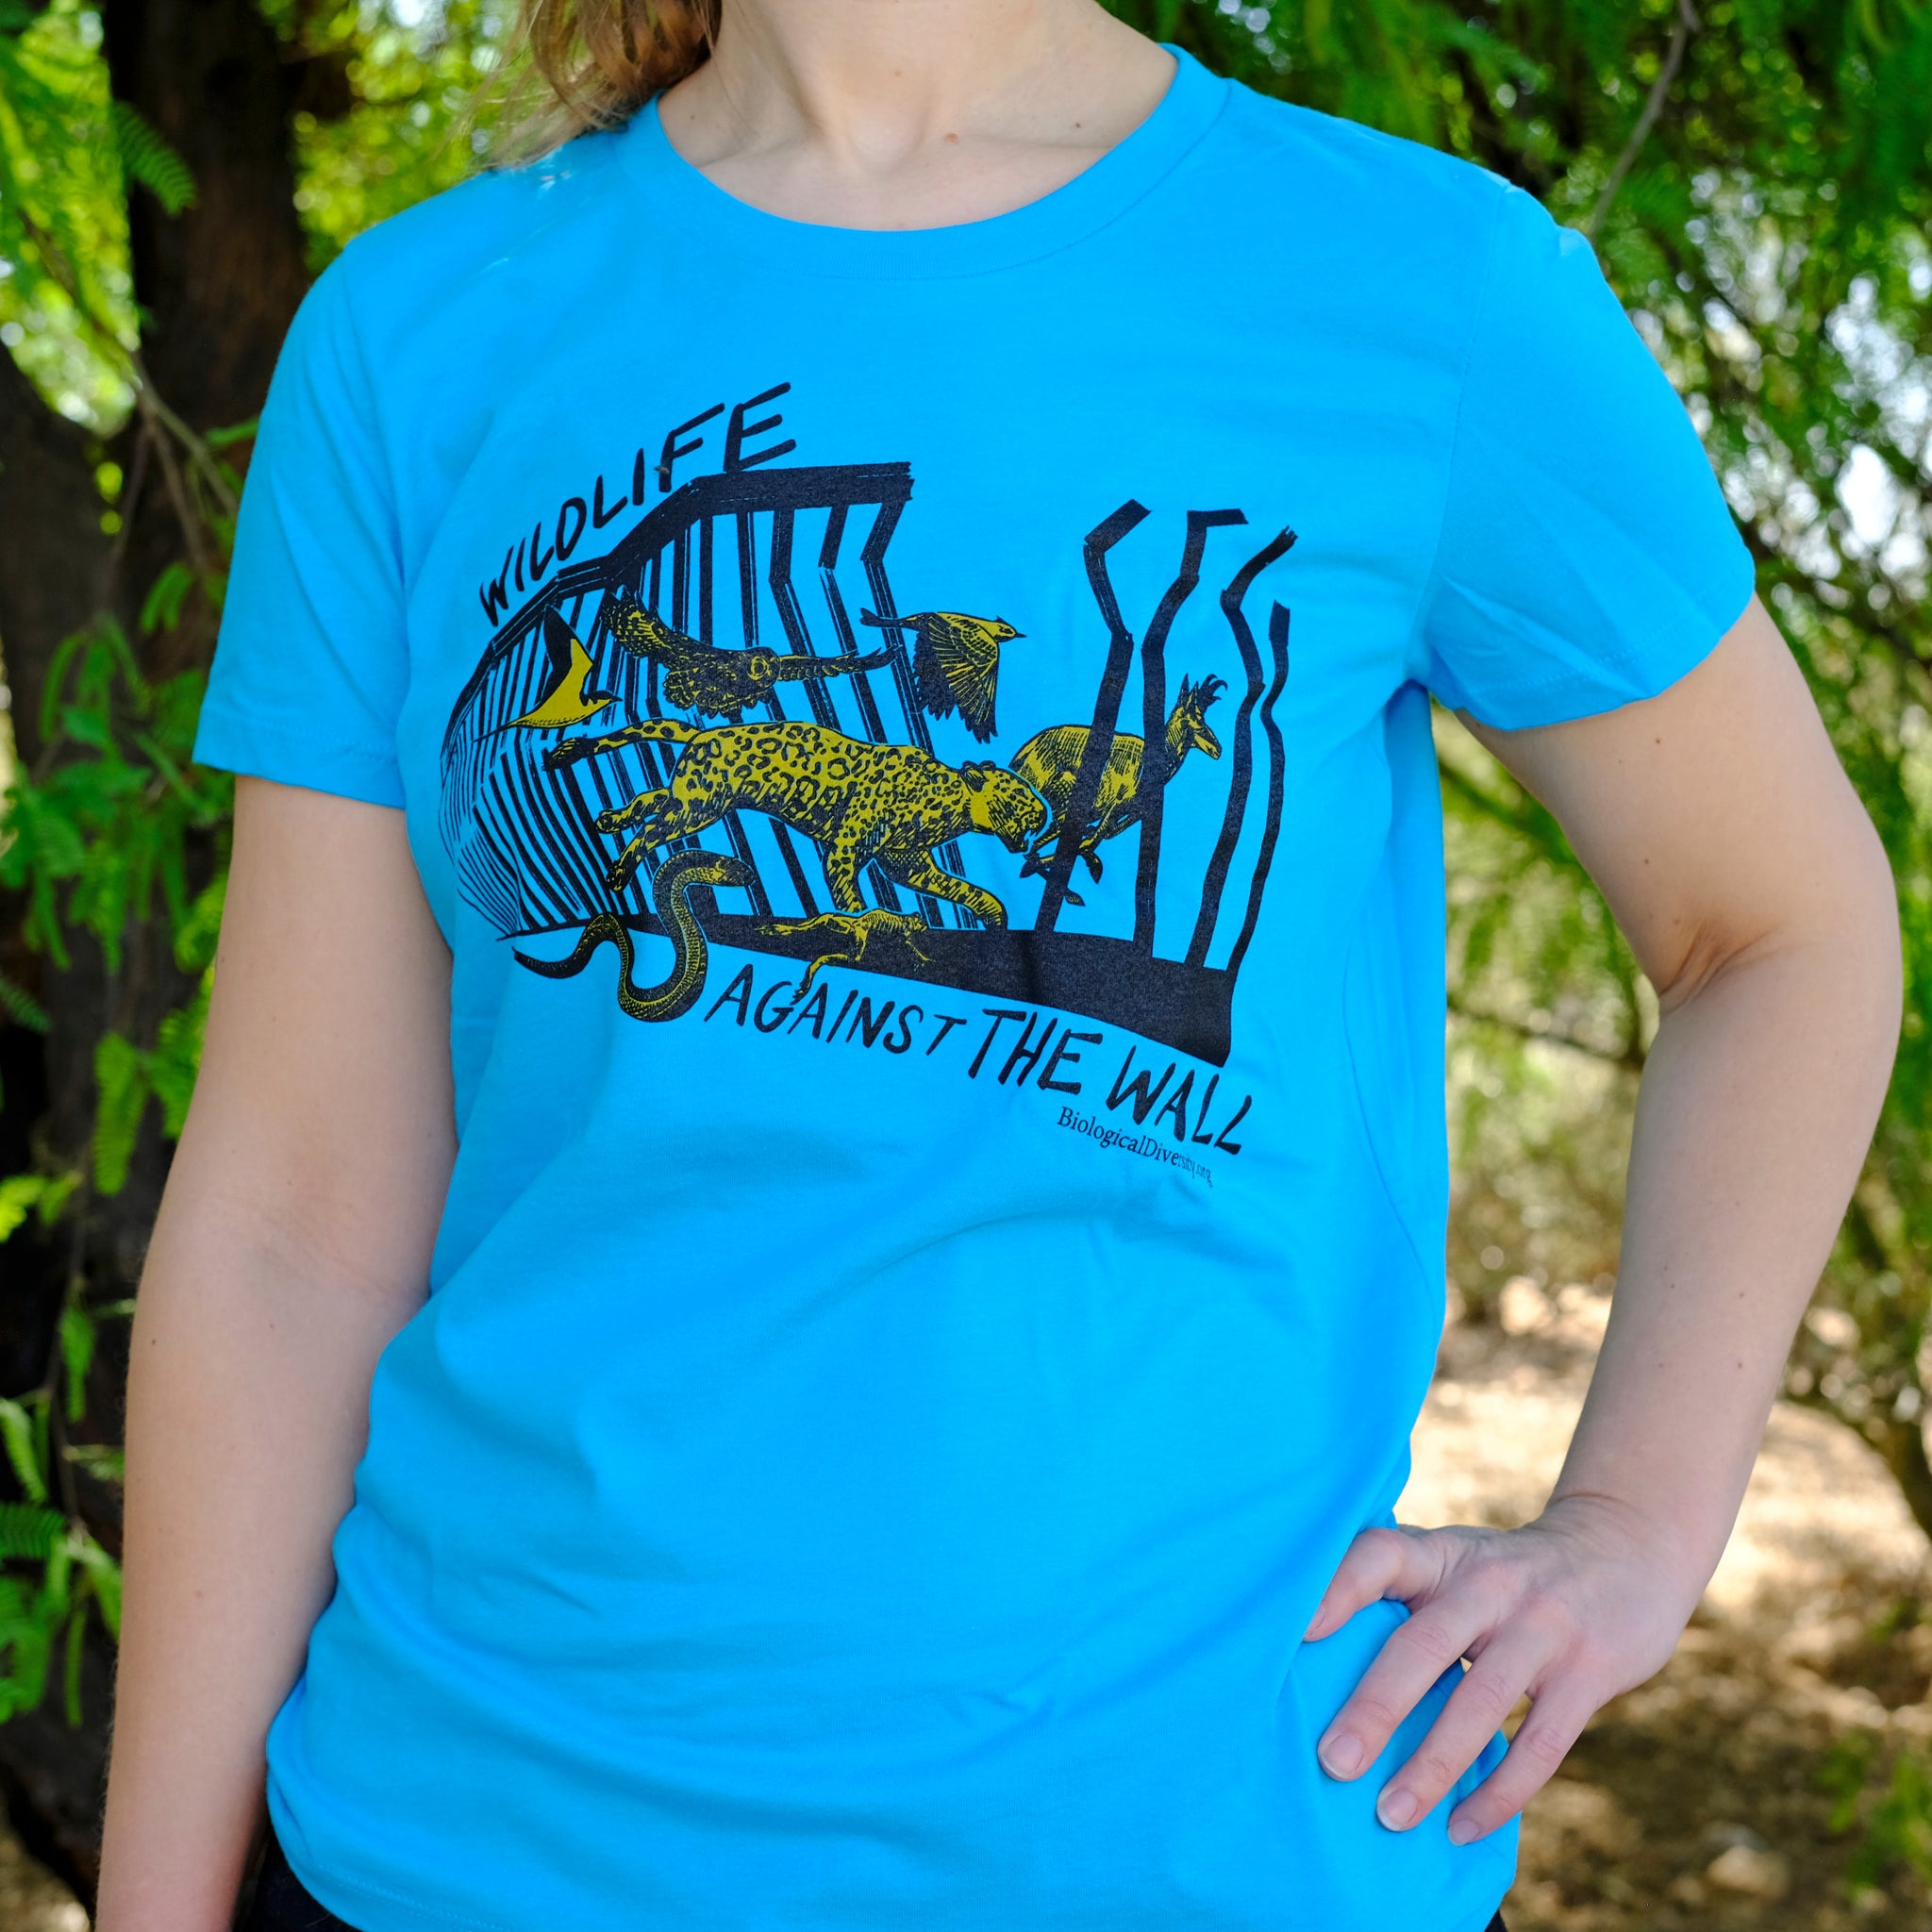 Short women's t-shirt – 'Wildlife Against the Wall' – for Biological Diversity